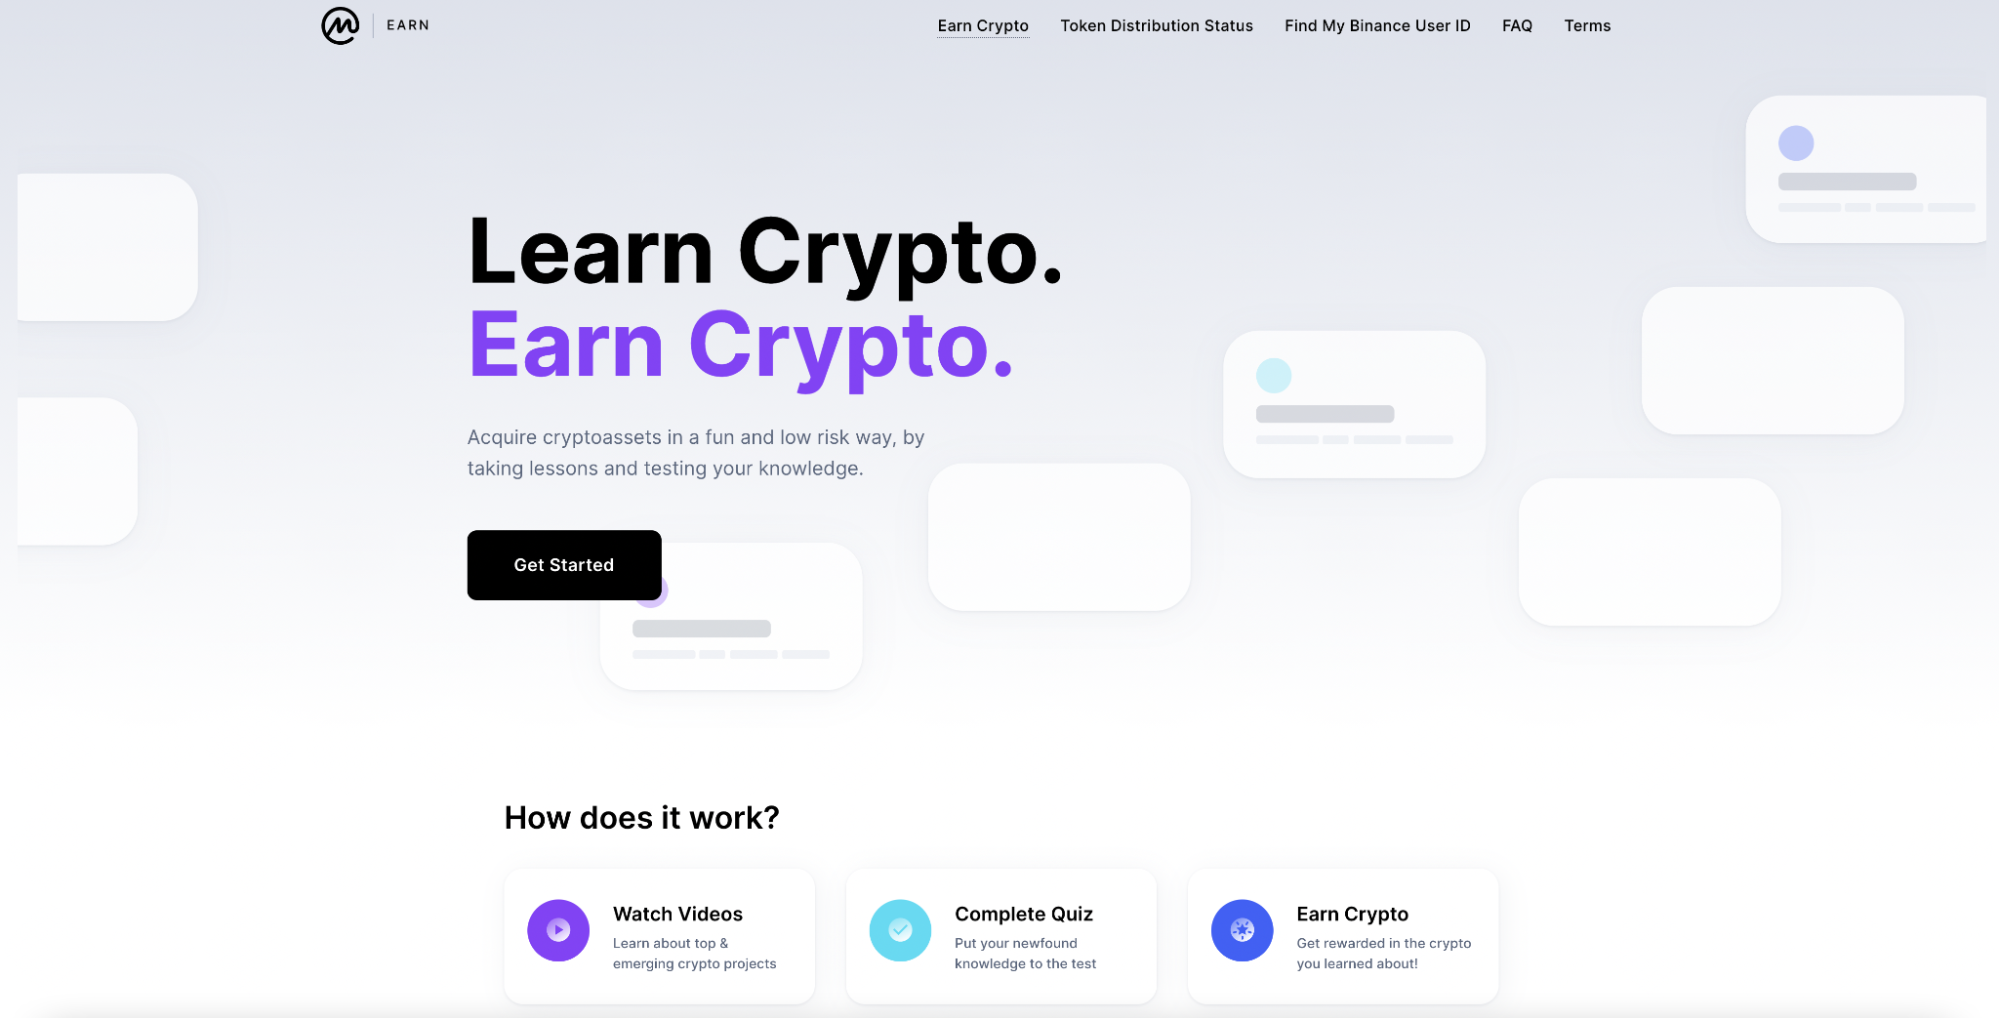 Learn crypto to earn crypto by CoinMarketCap